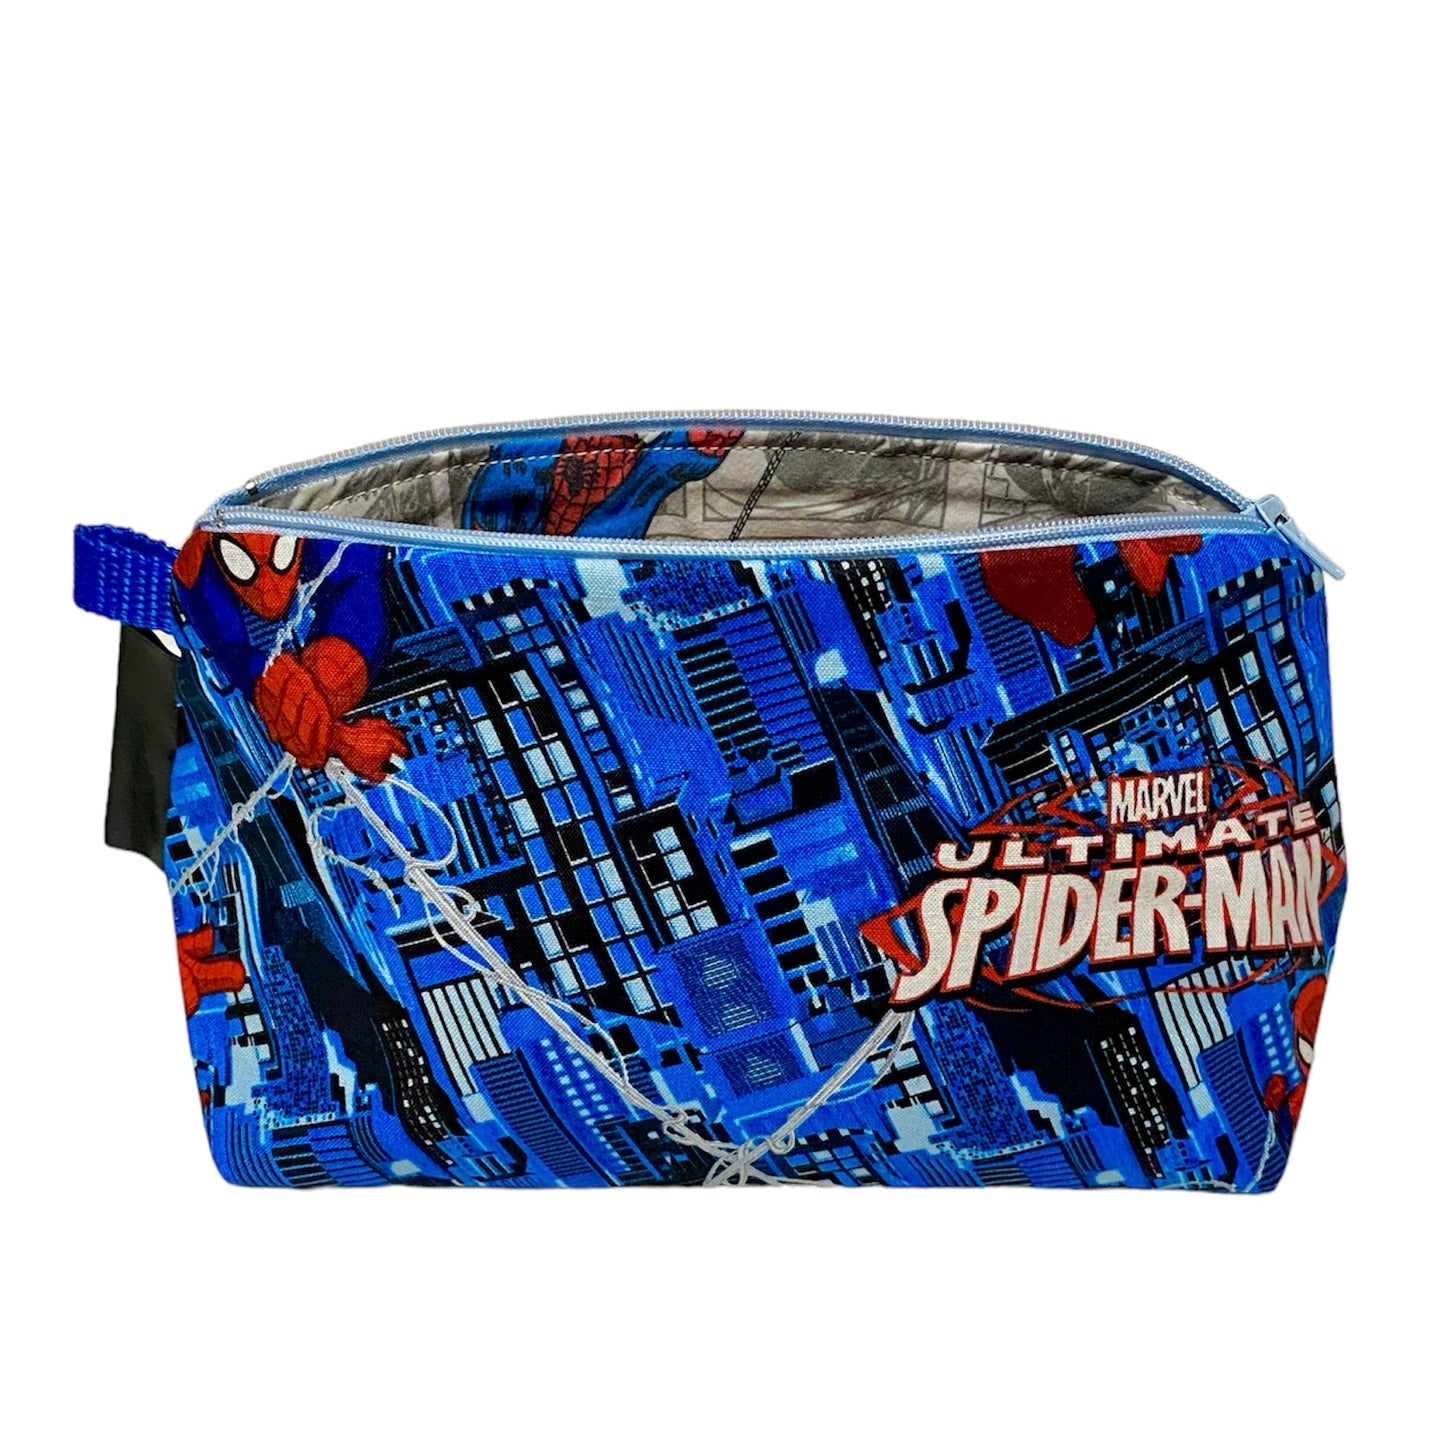 Superhero Wedge Bags